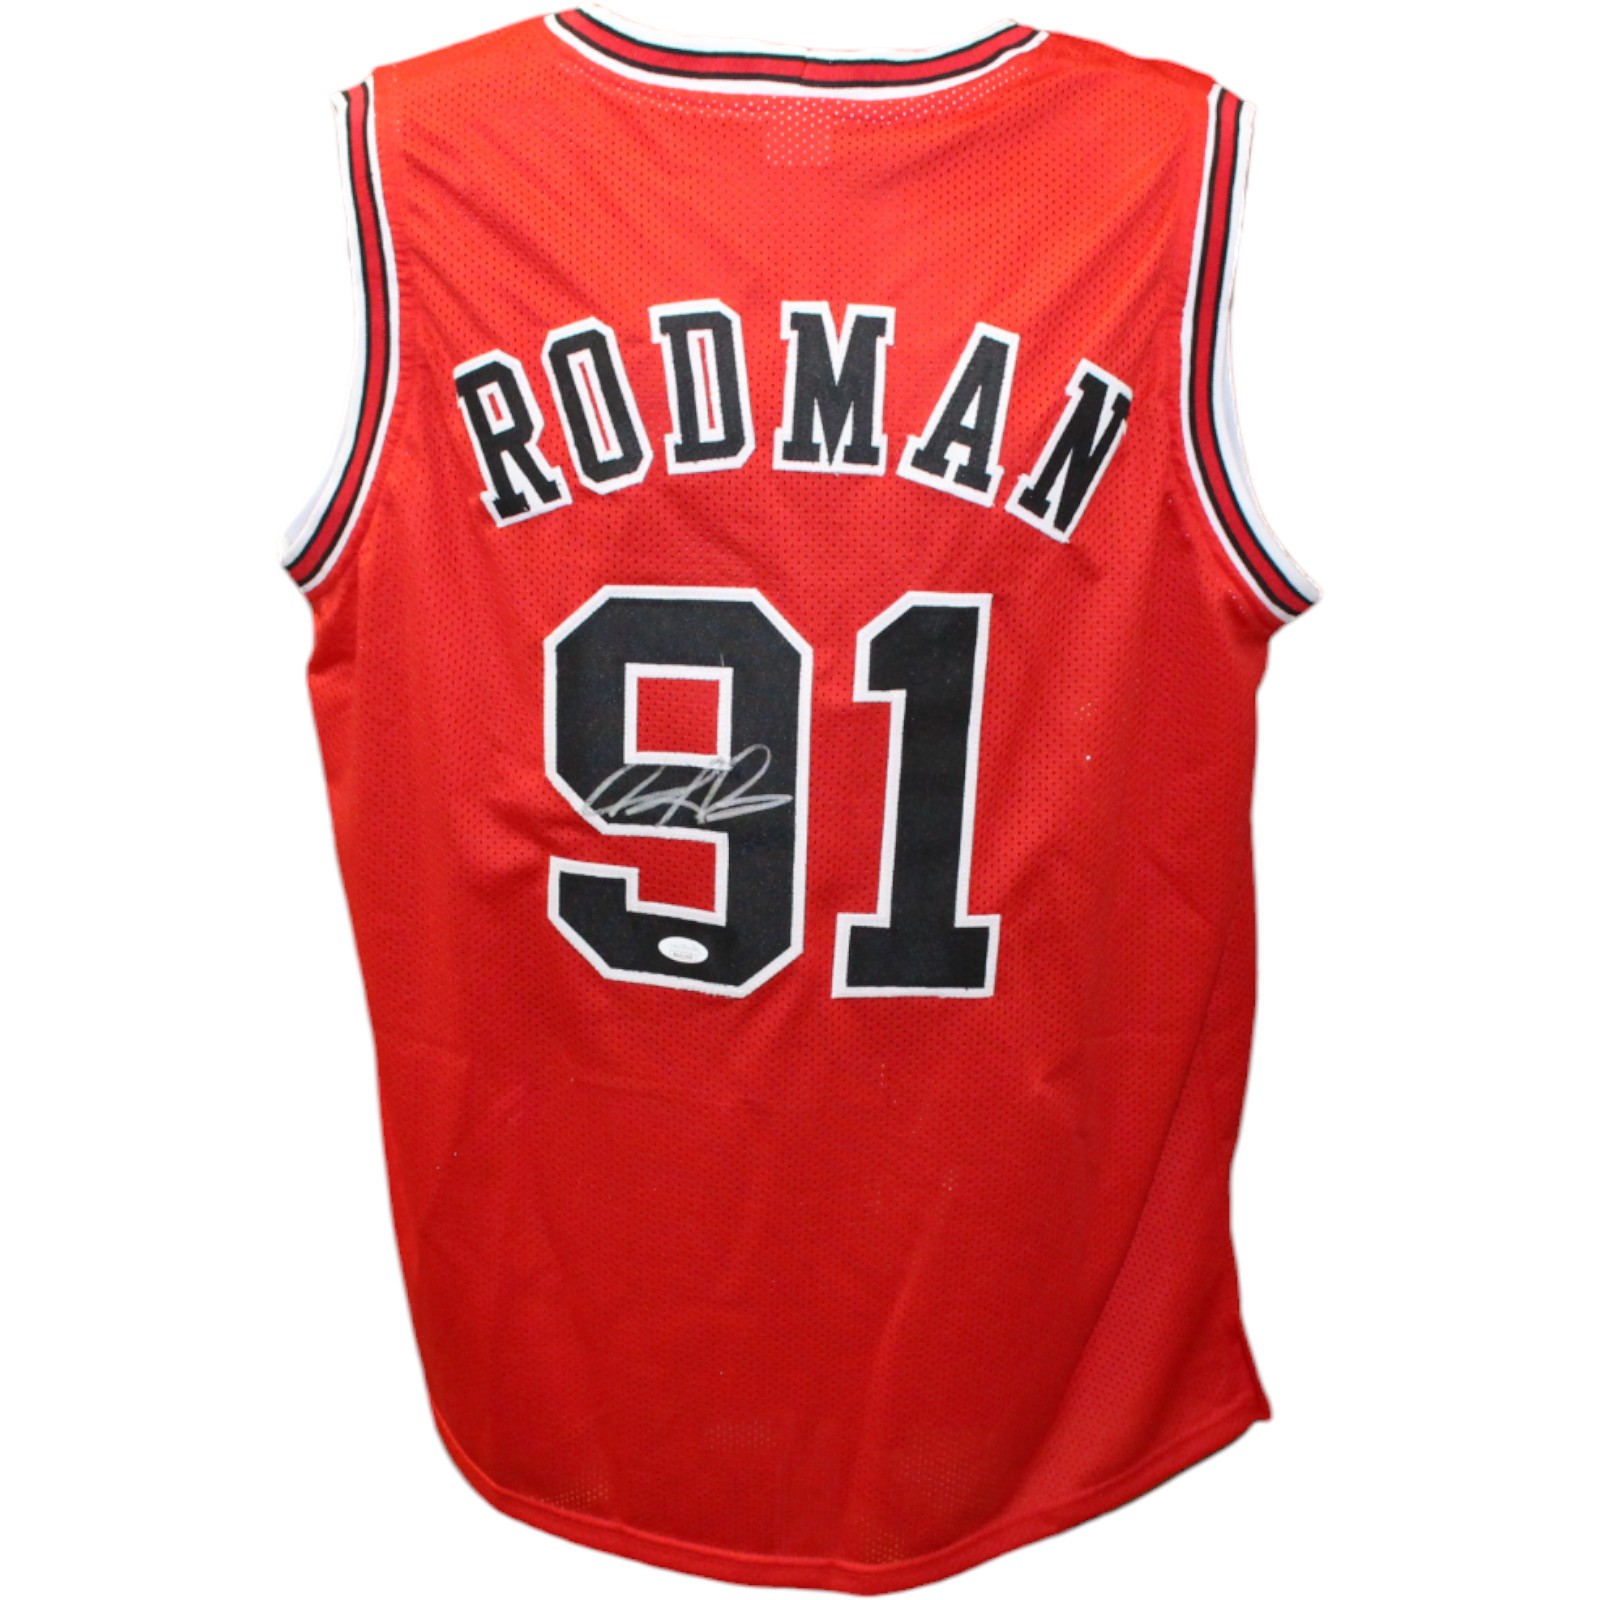 Dennis Rodman Autographed/Signed Pro Style Red Jersey JSA